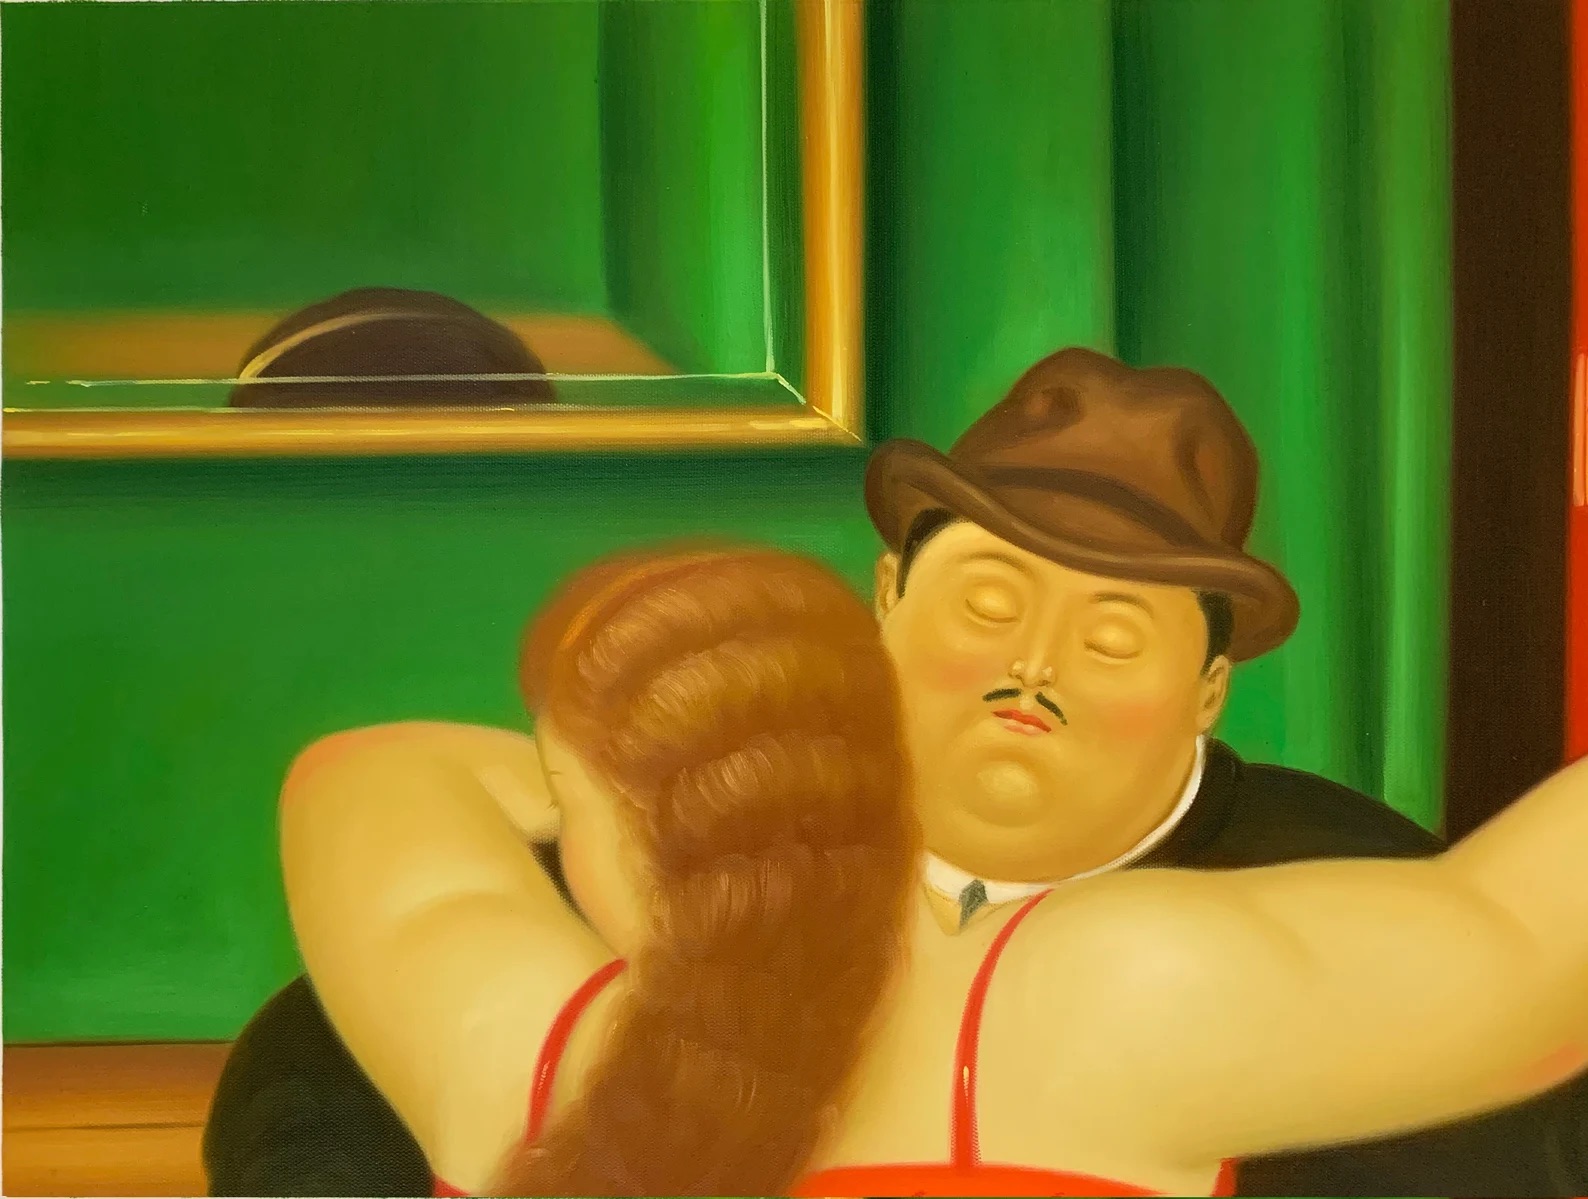 Fernando Botero "Dancing" Oil Painting - Image 2 of 2